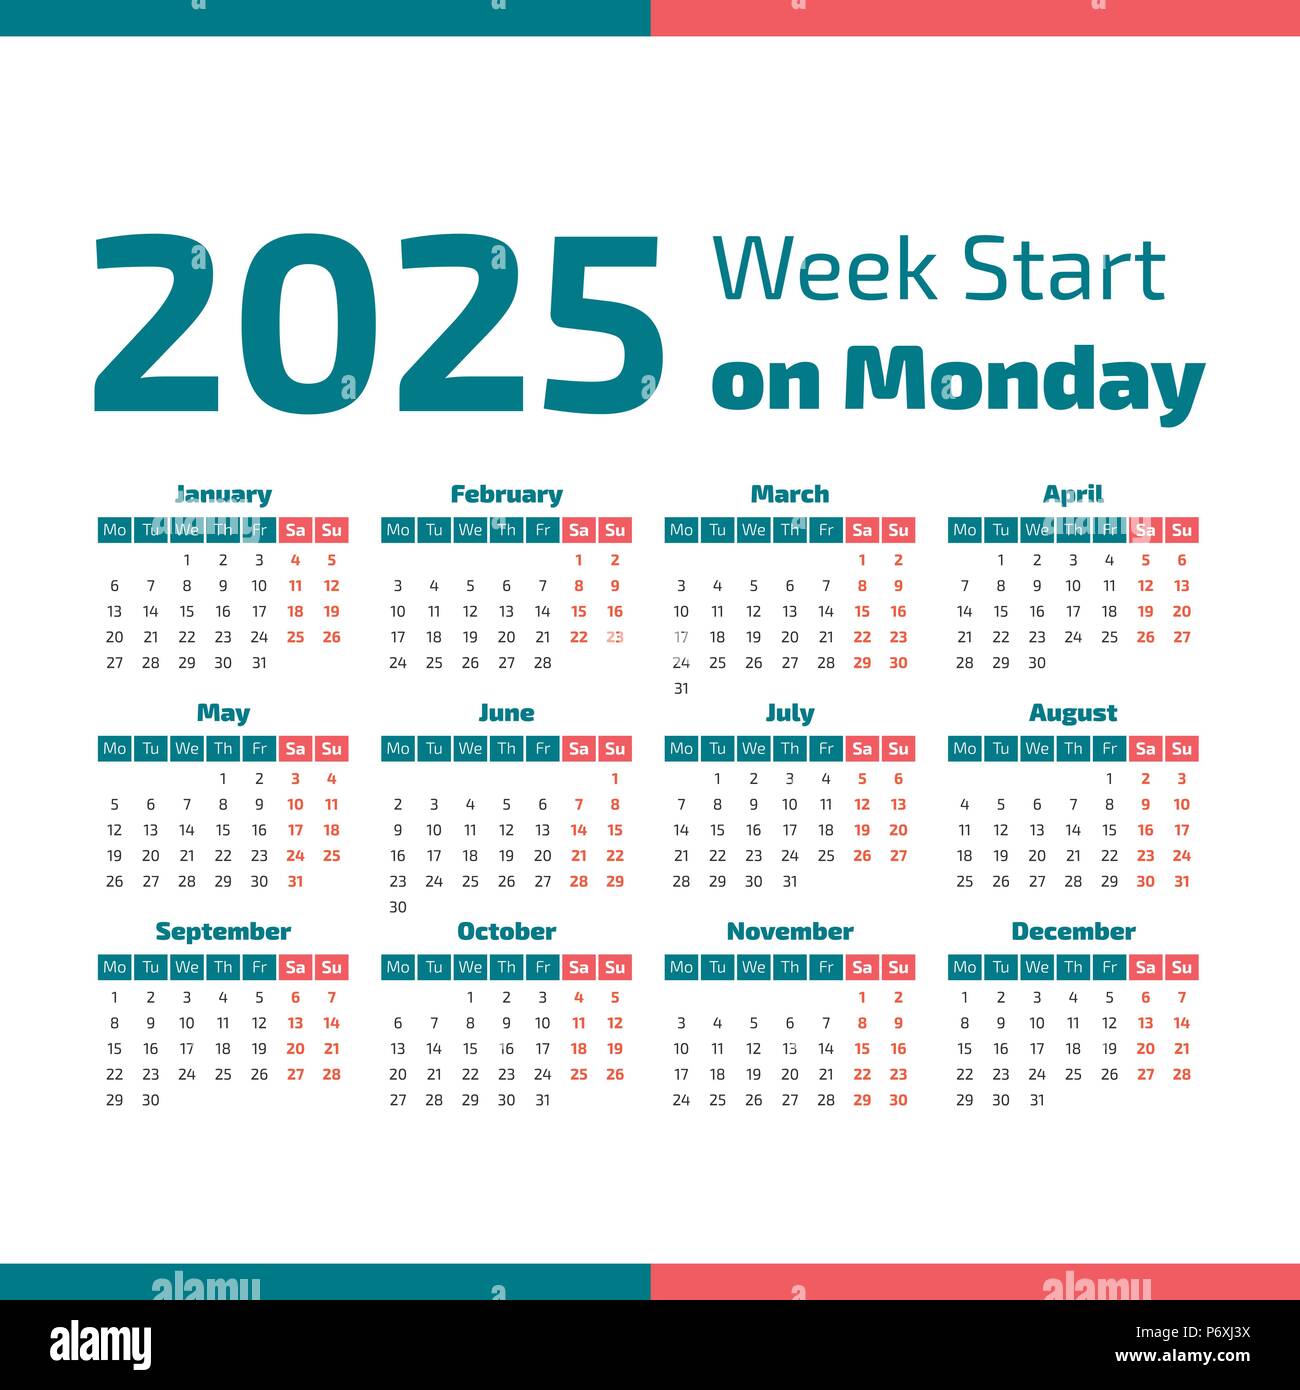 Lunar New Year Calendar 2025